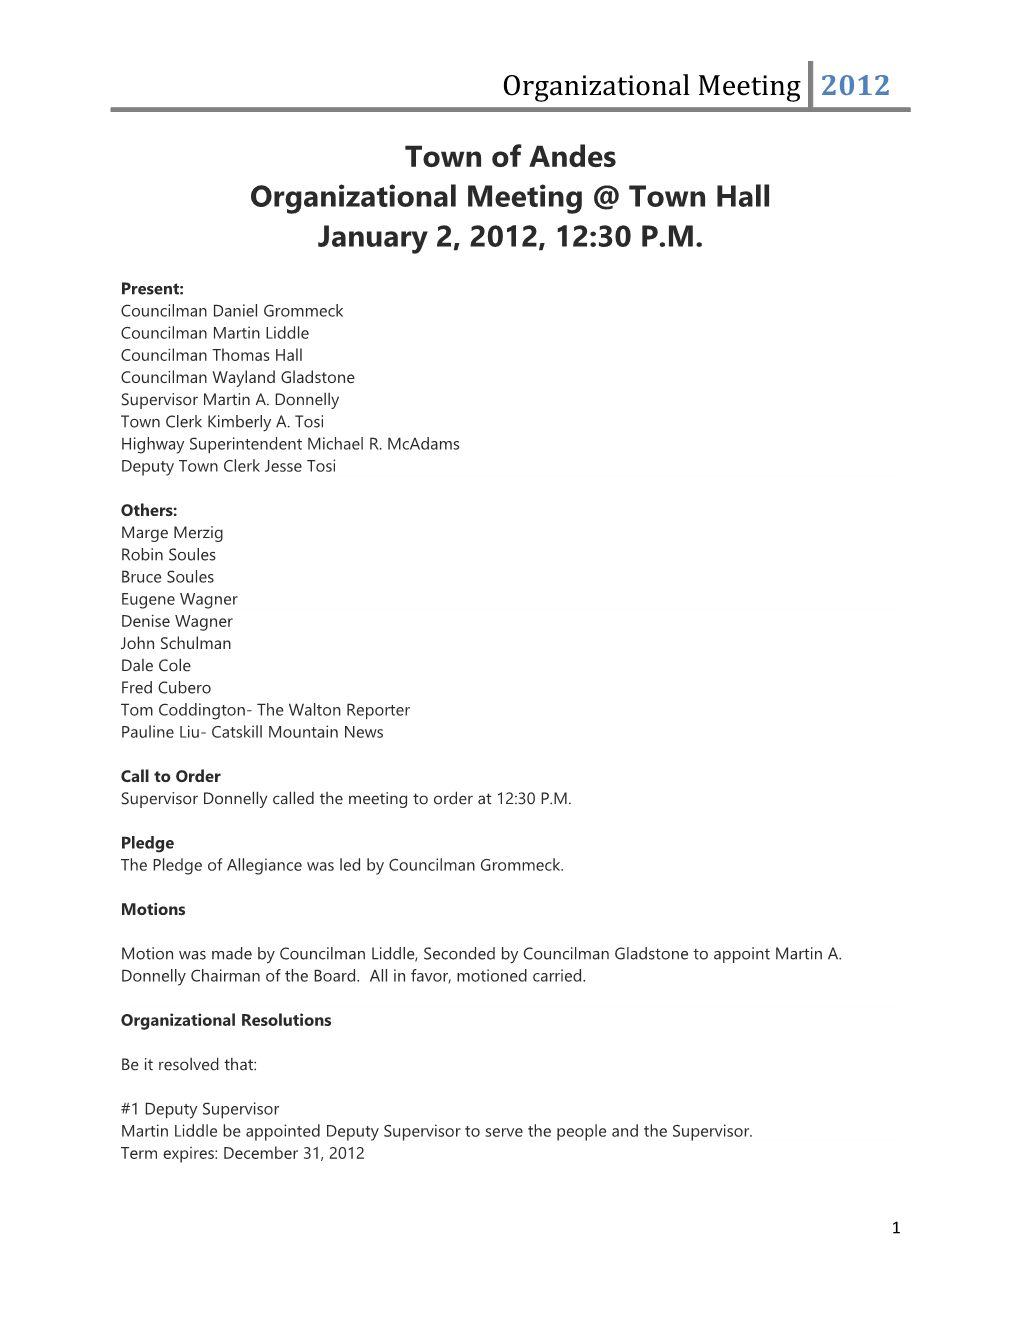 Organizational Meeting Town Hall